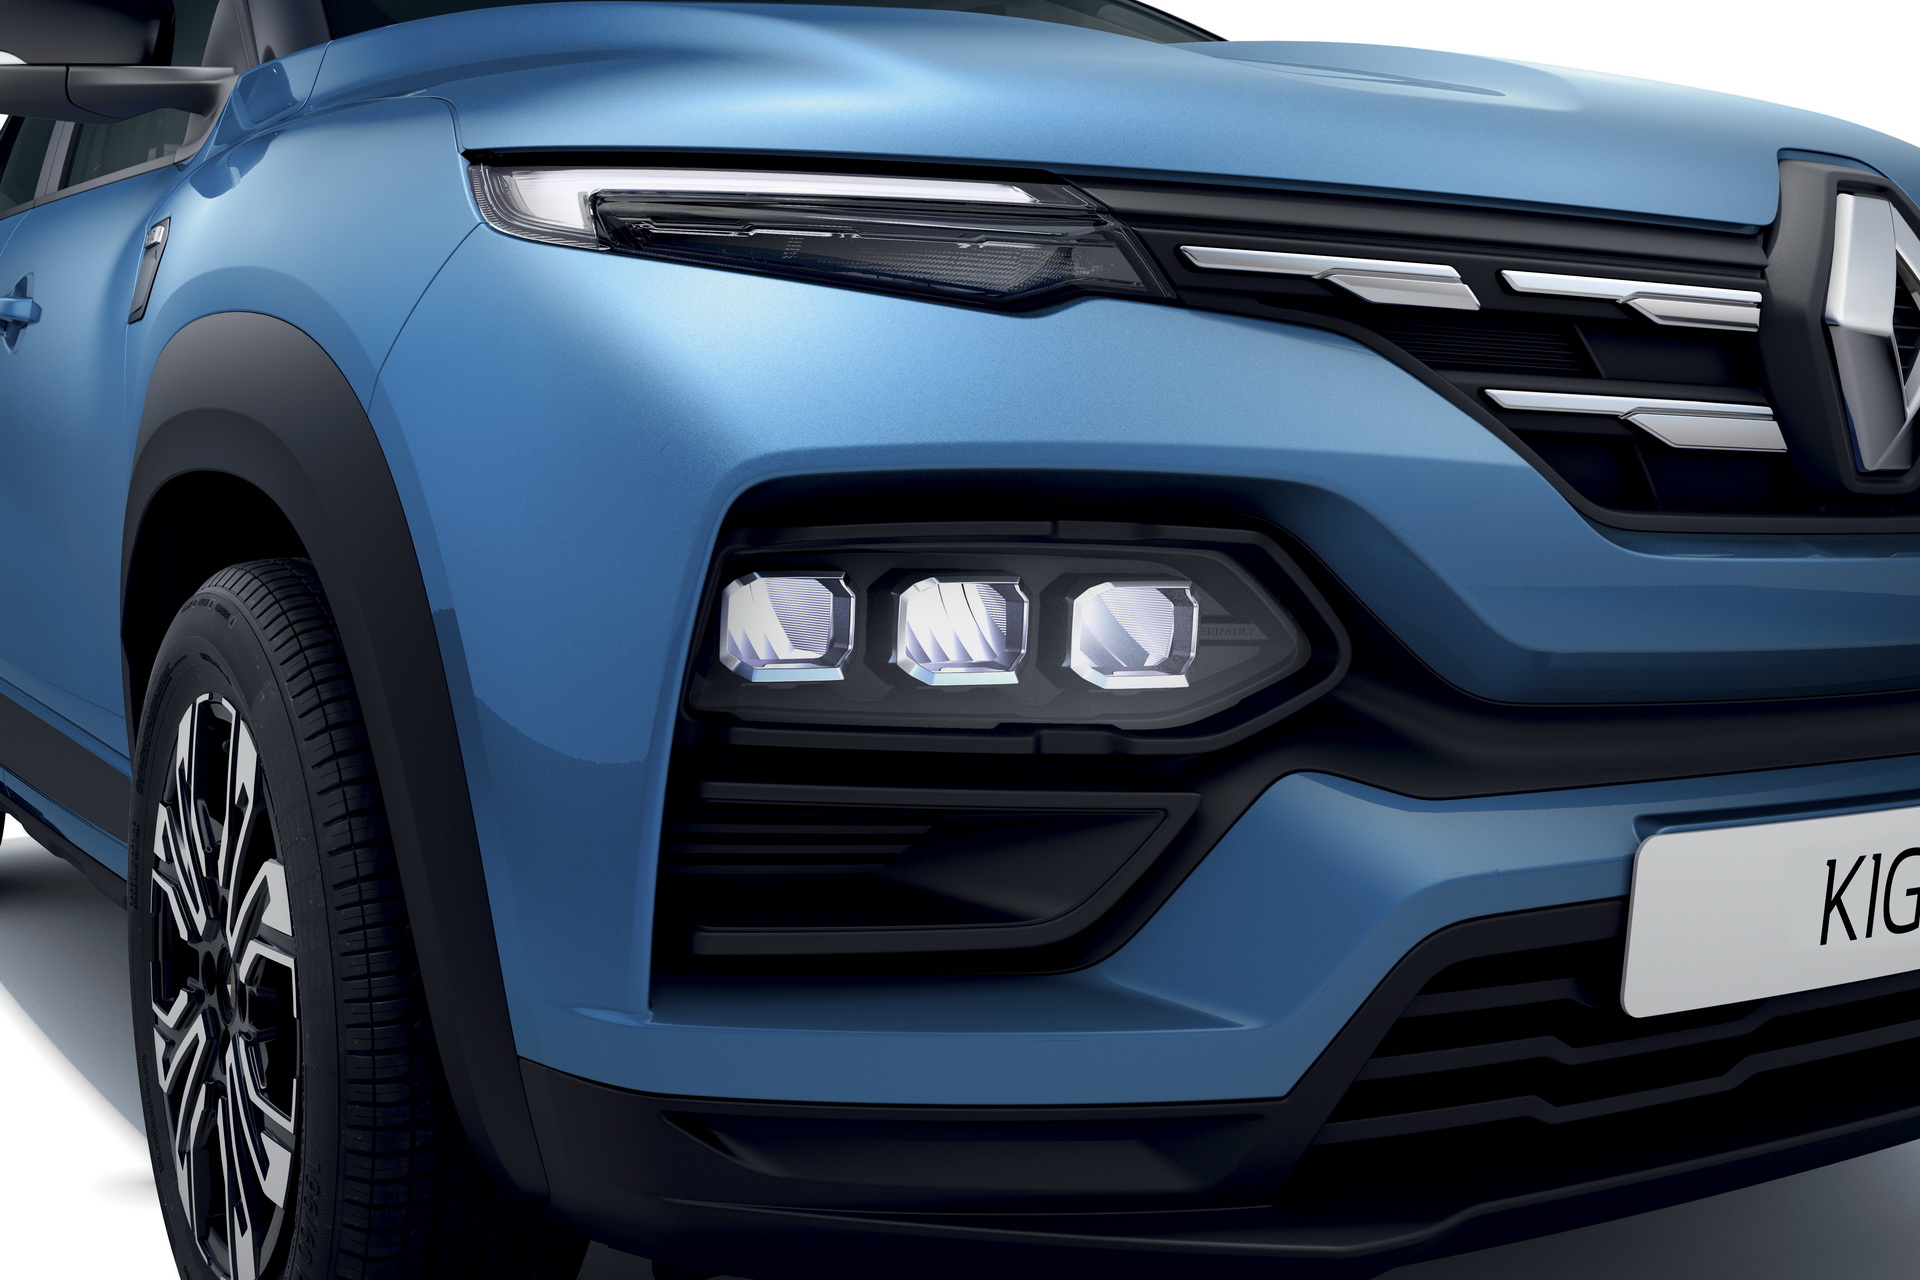 Renault, yeni kompakt crossover modeli Kiger'ı tanıttı